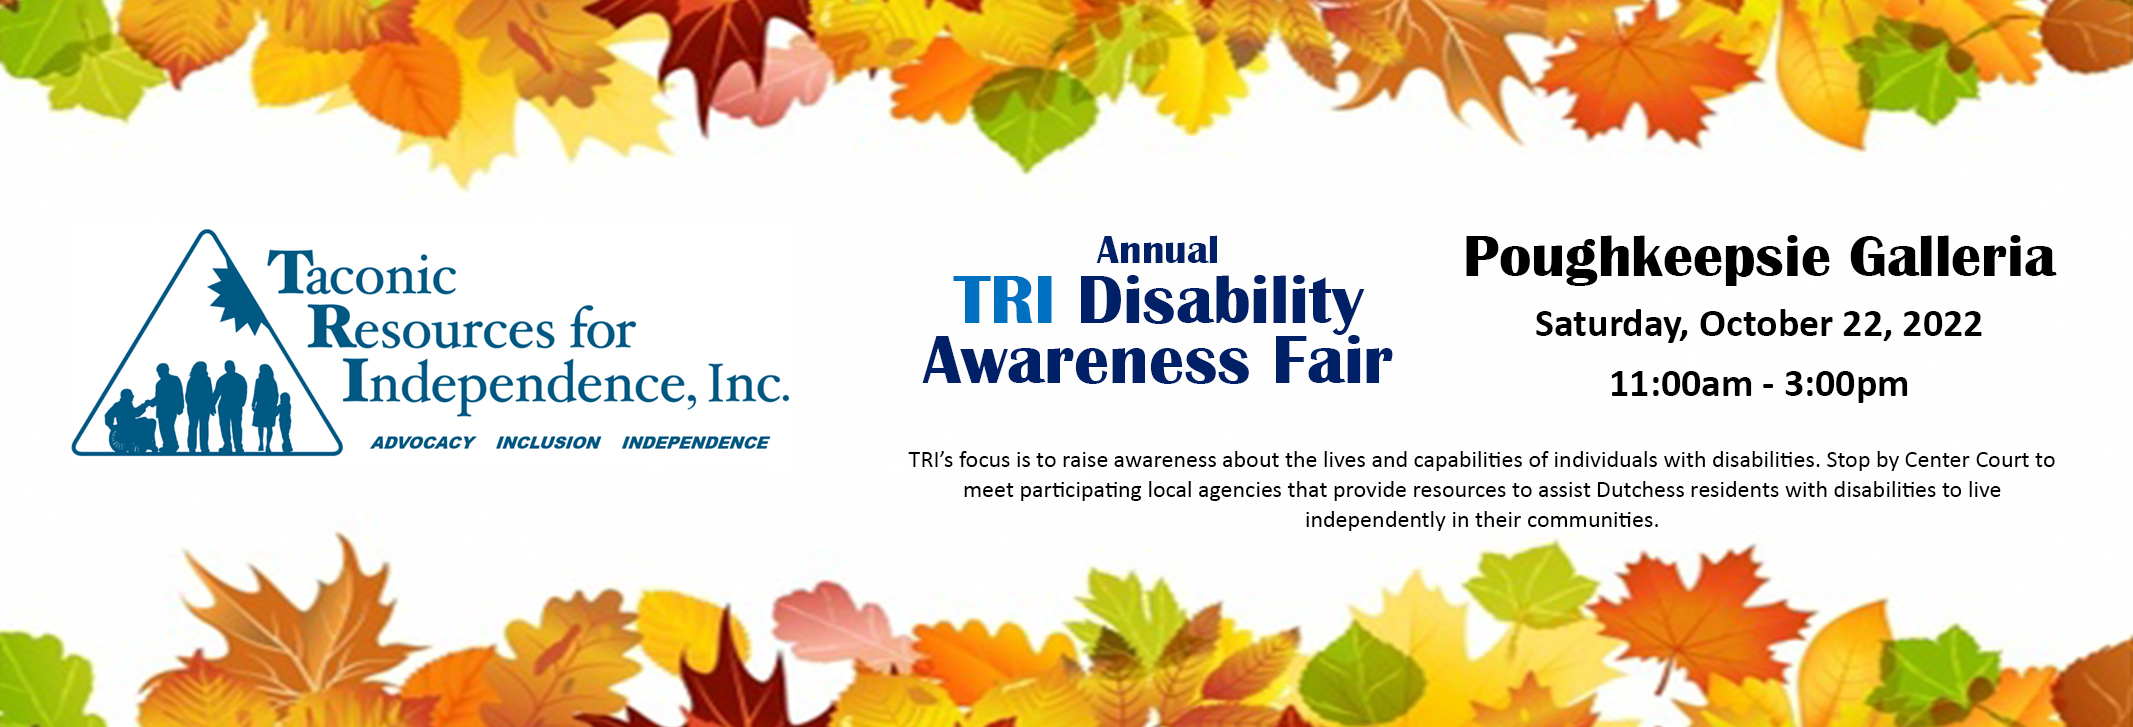 TRI Disability Awareness Fair FIN